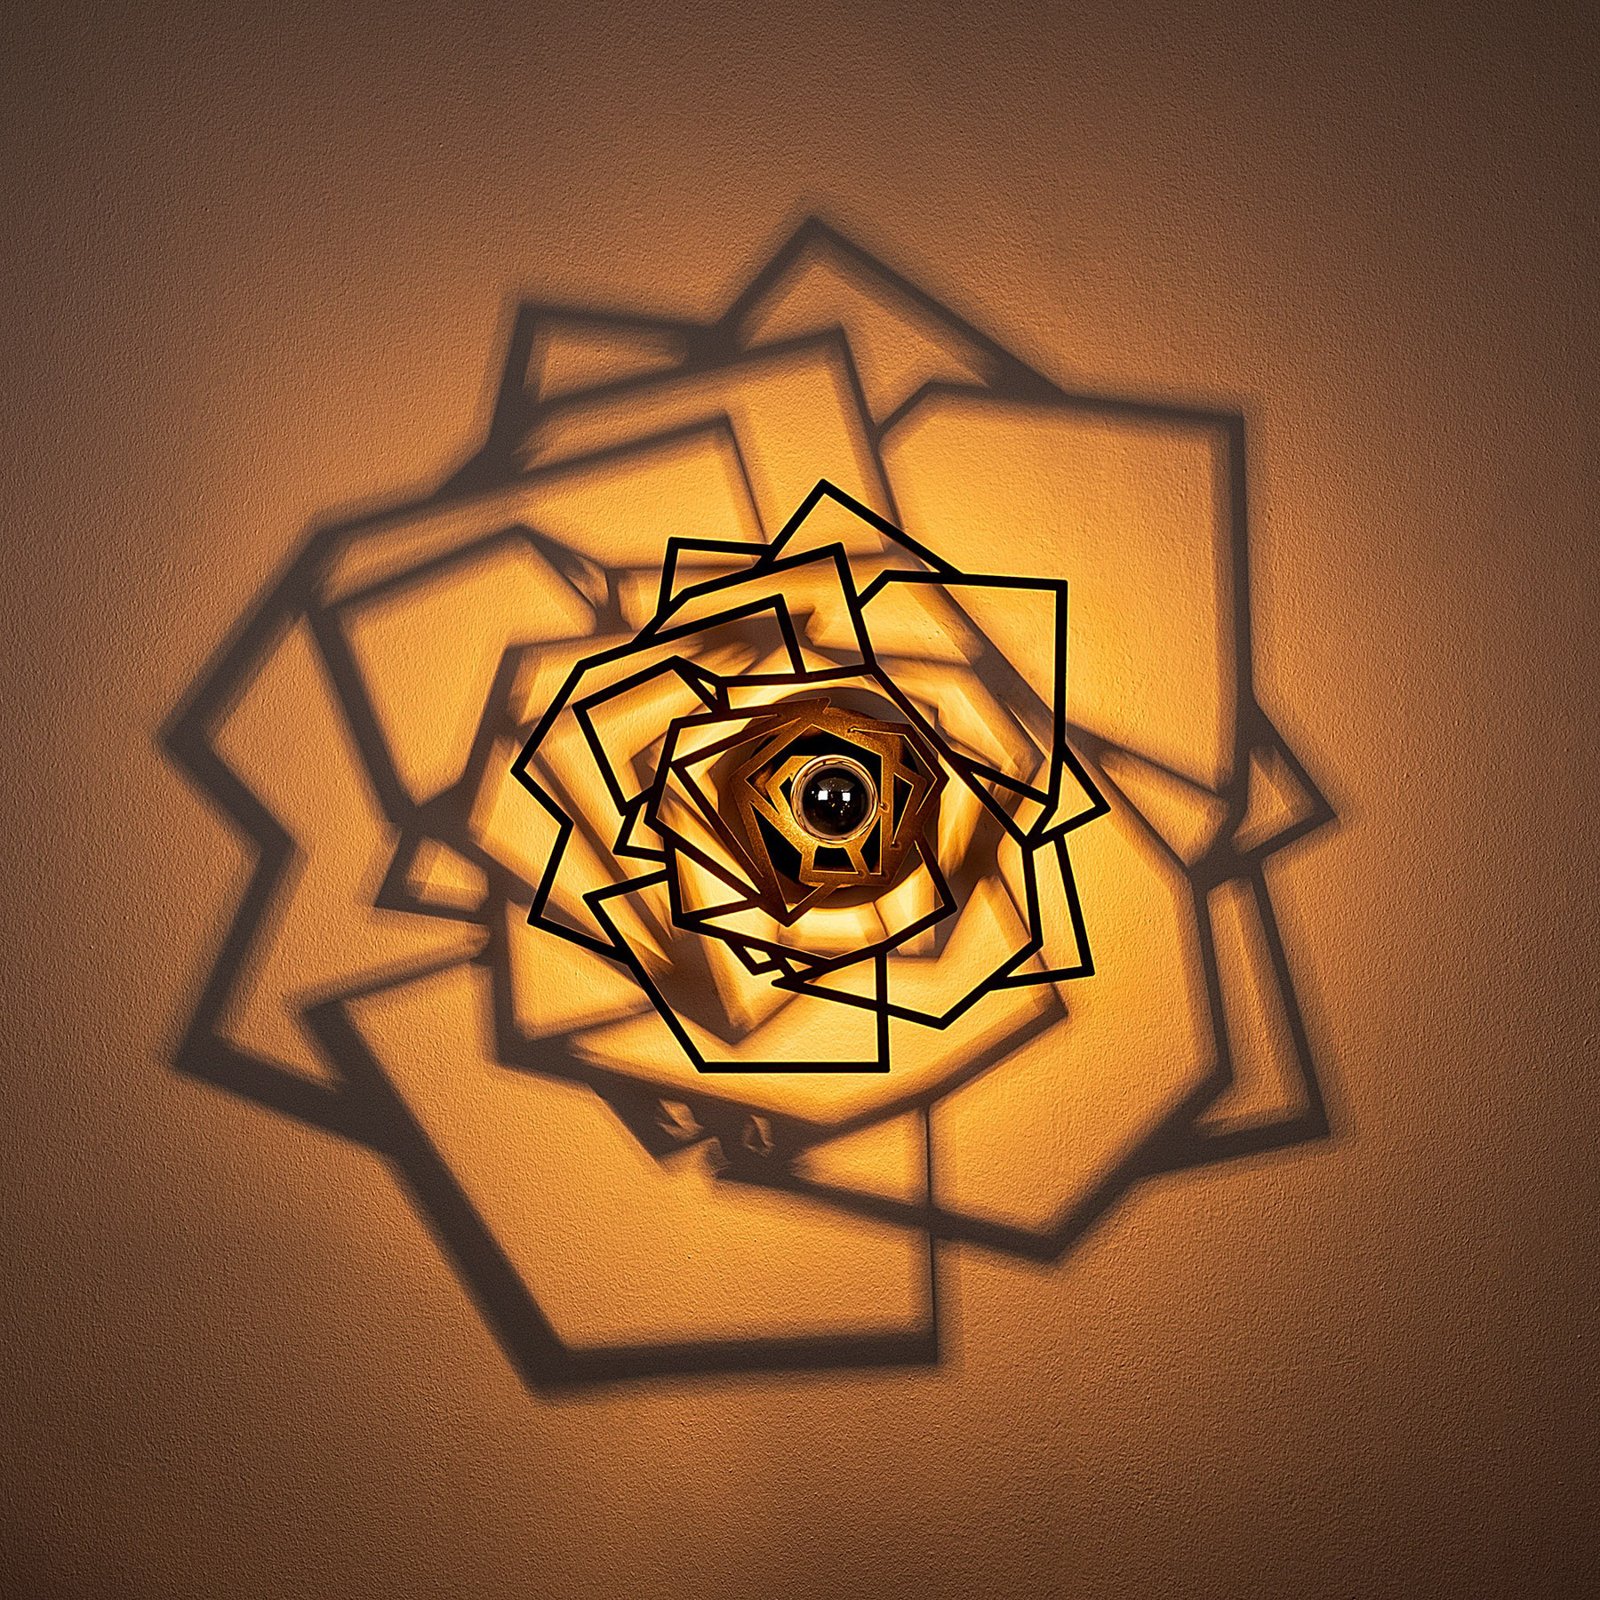 Vägglampa W-042, svart blomdesign, lasercut